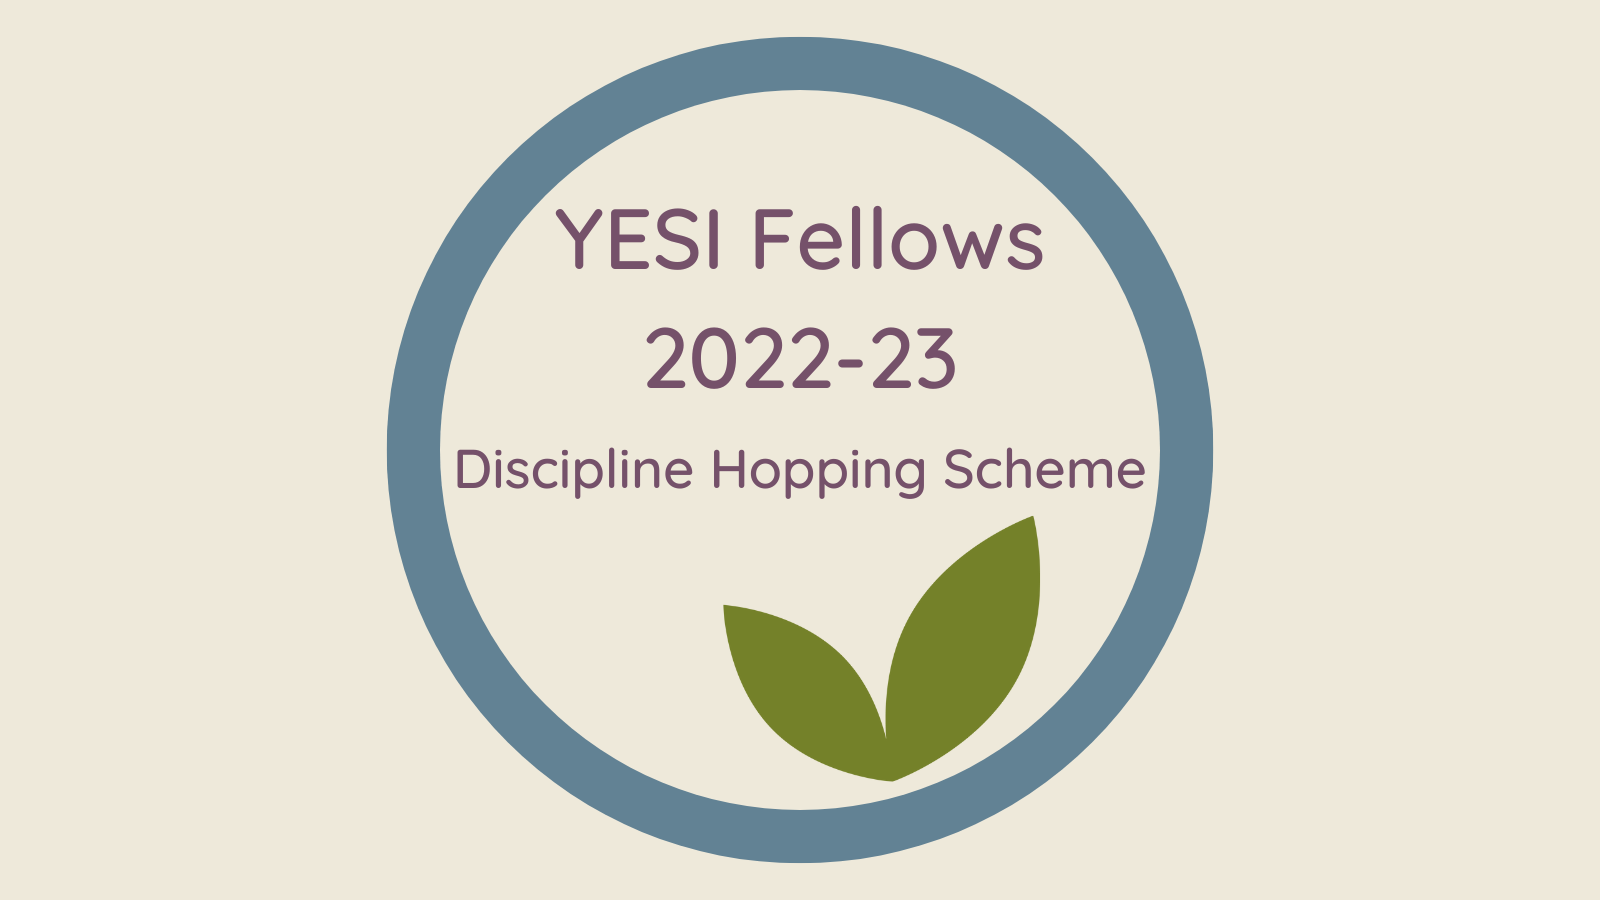 YESI Fellows 2022-23 Discipline Hopping Scheme